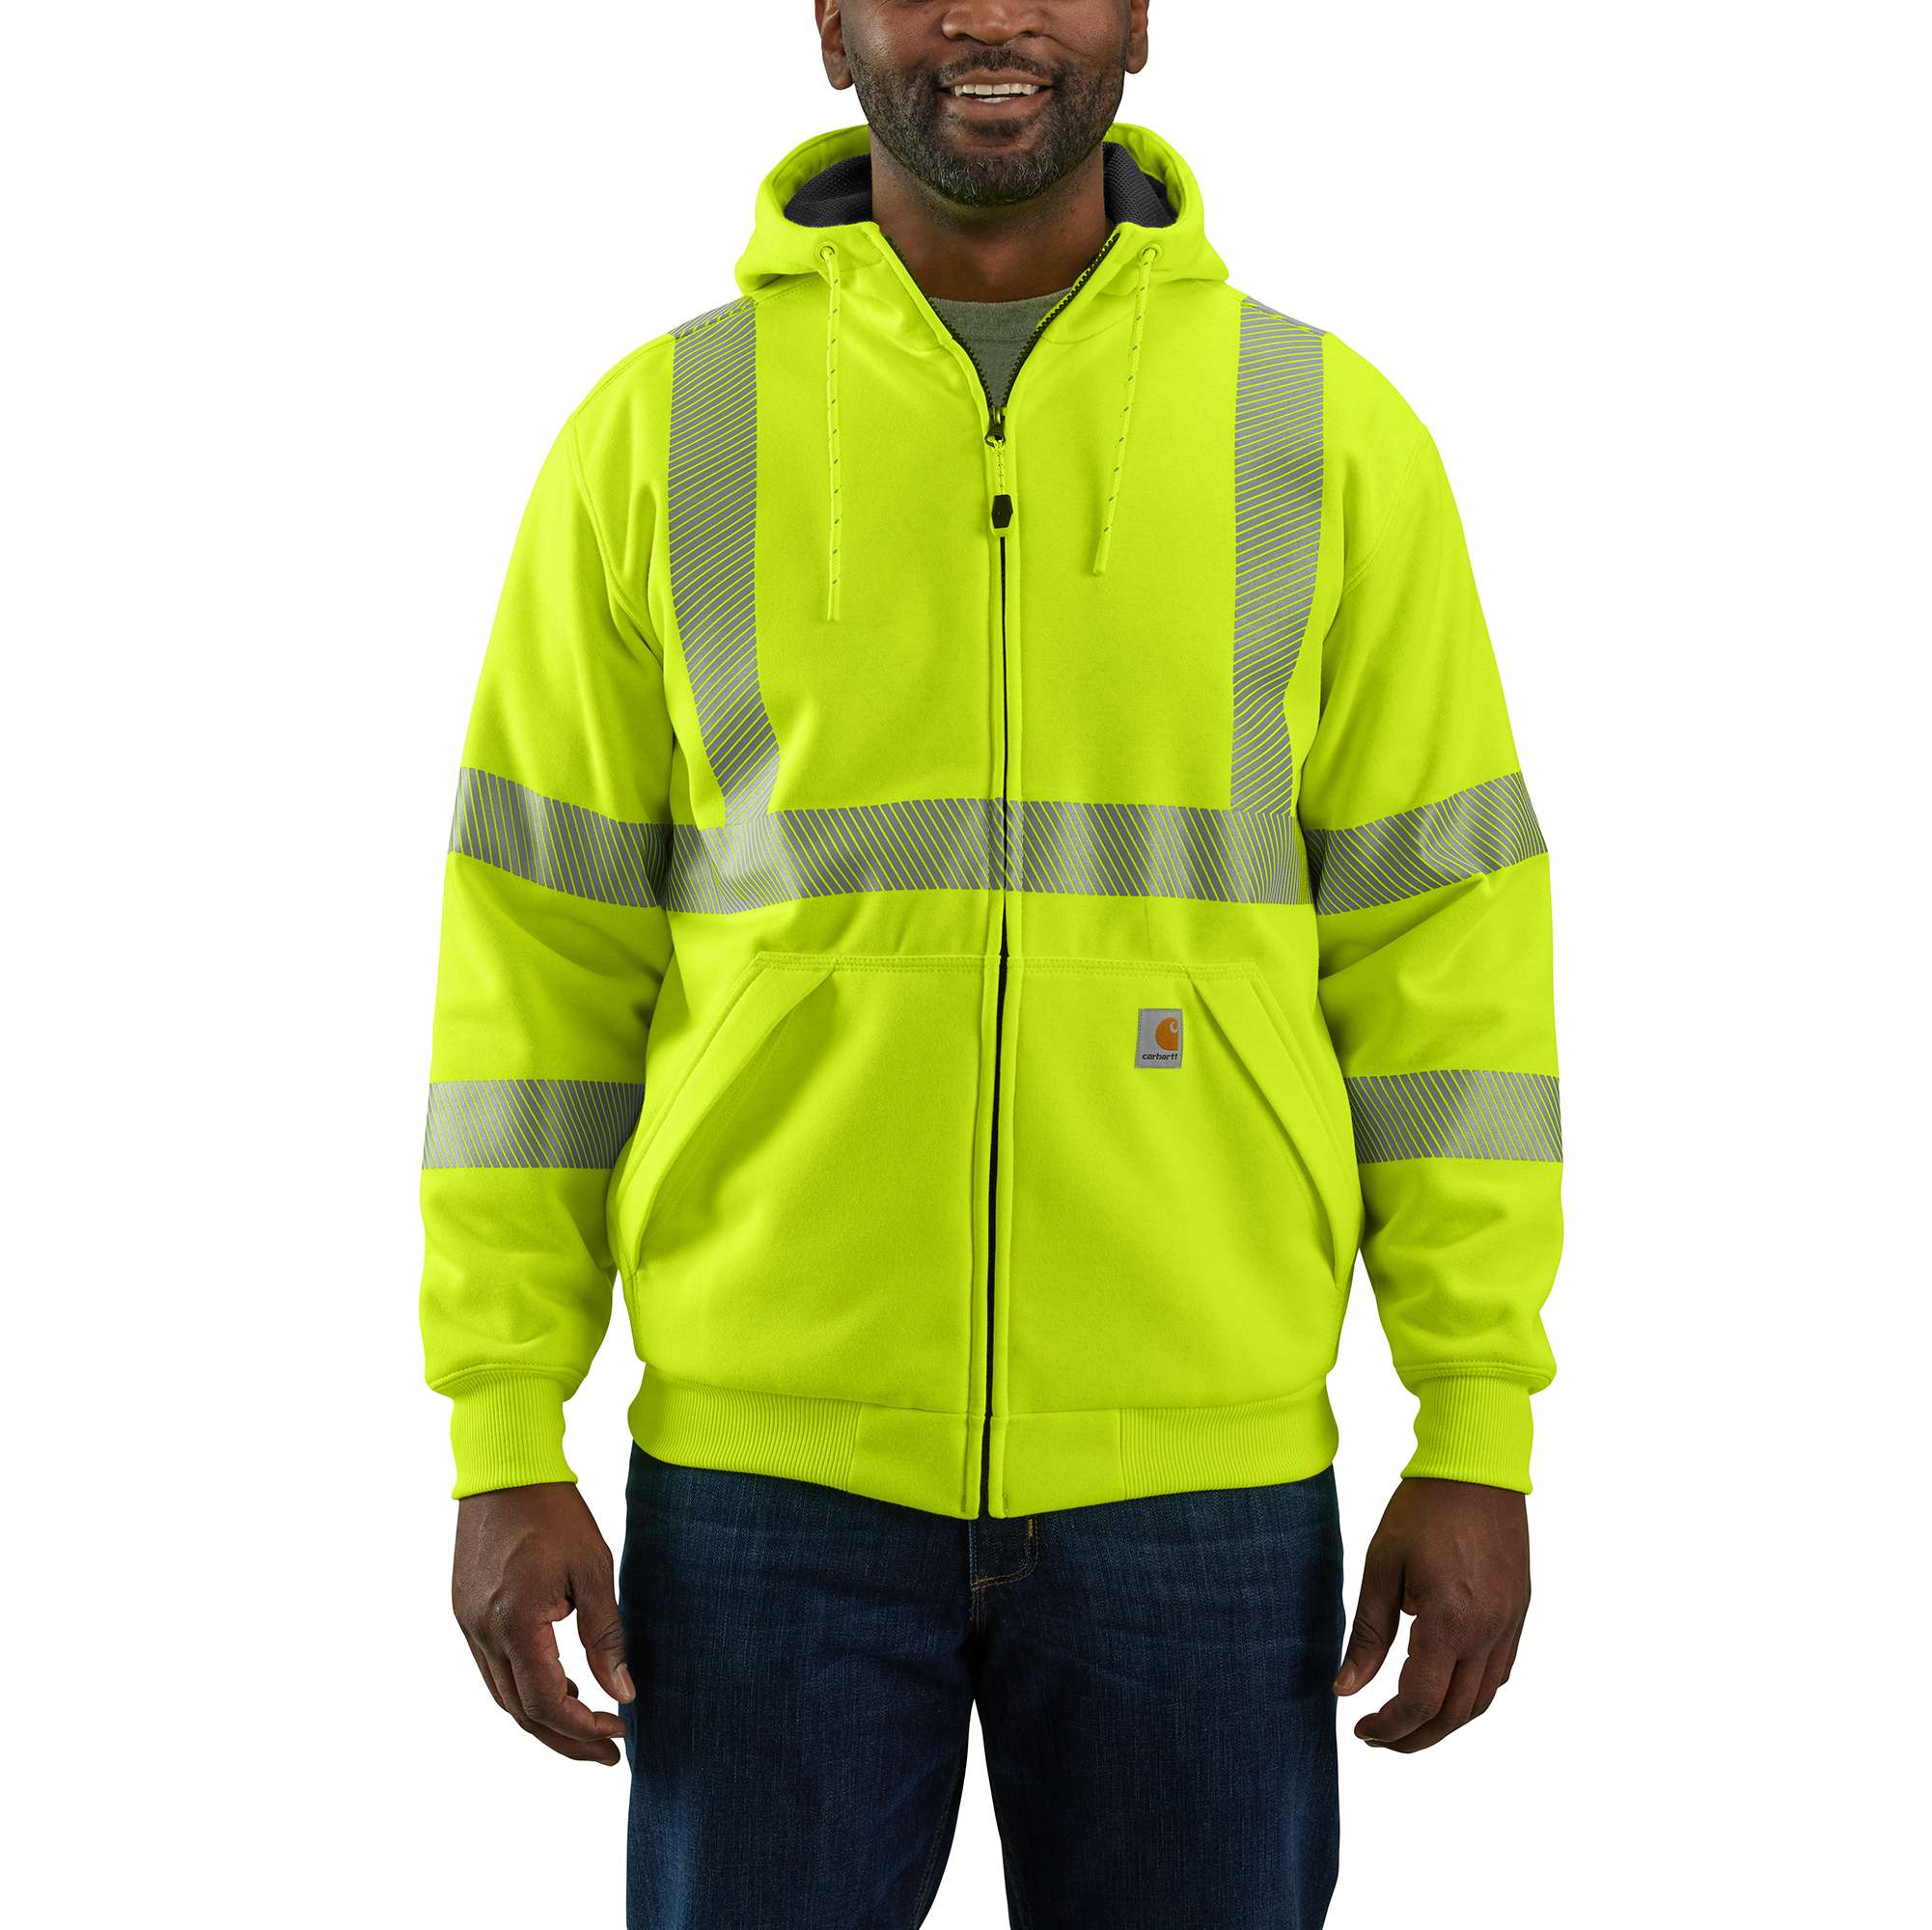 VENDACE Hi Vis Reflective Safety Winter Jackets for Men Polar Fleece Lining ANSI Class 3 High Visibility Jacket(Yellow,4XL)